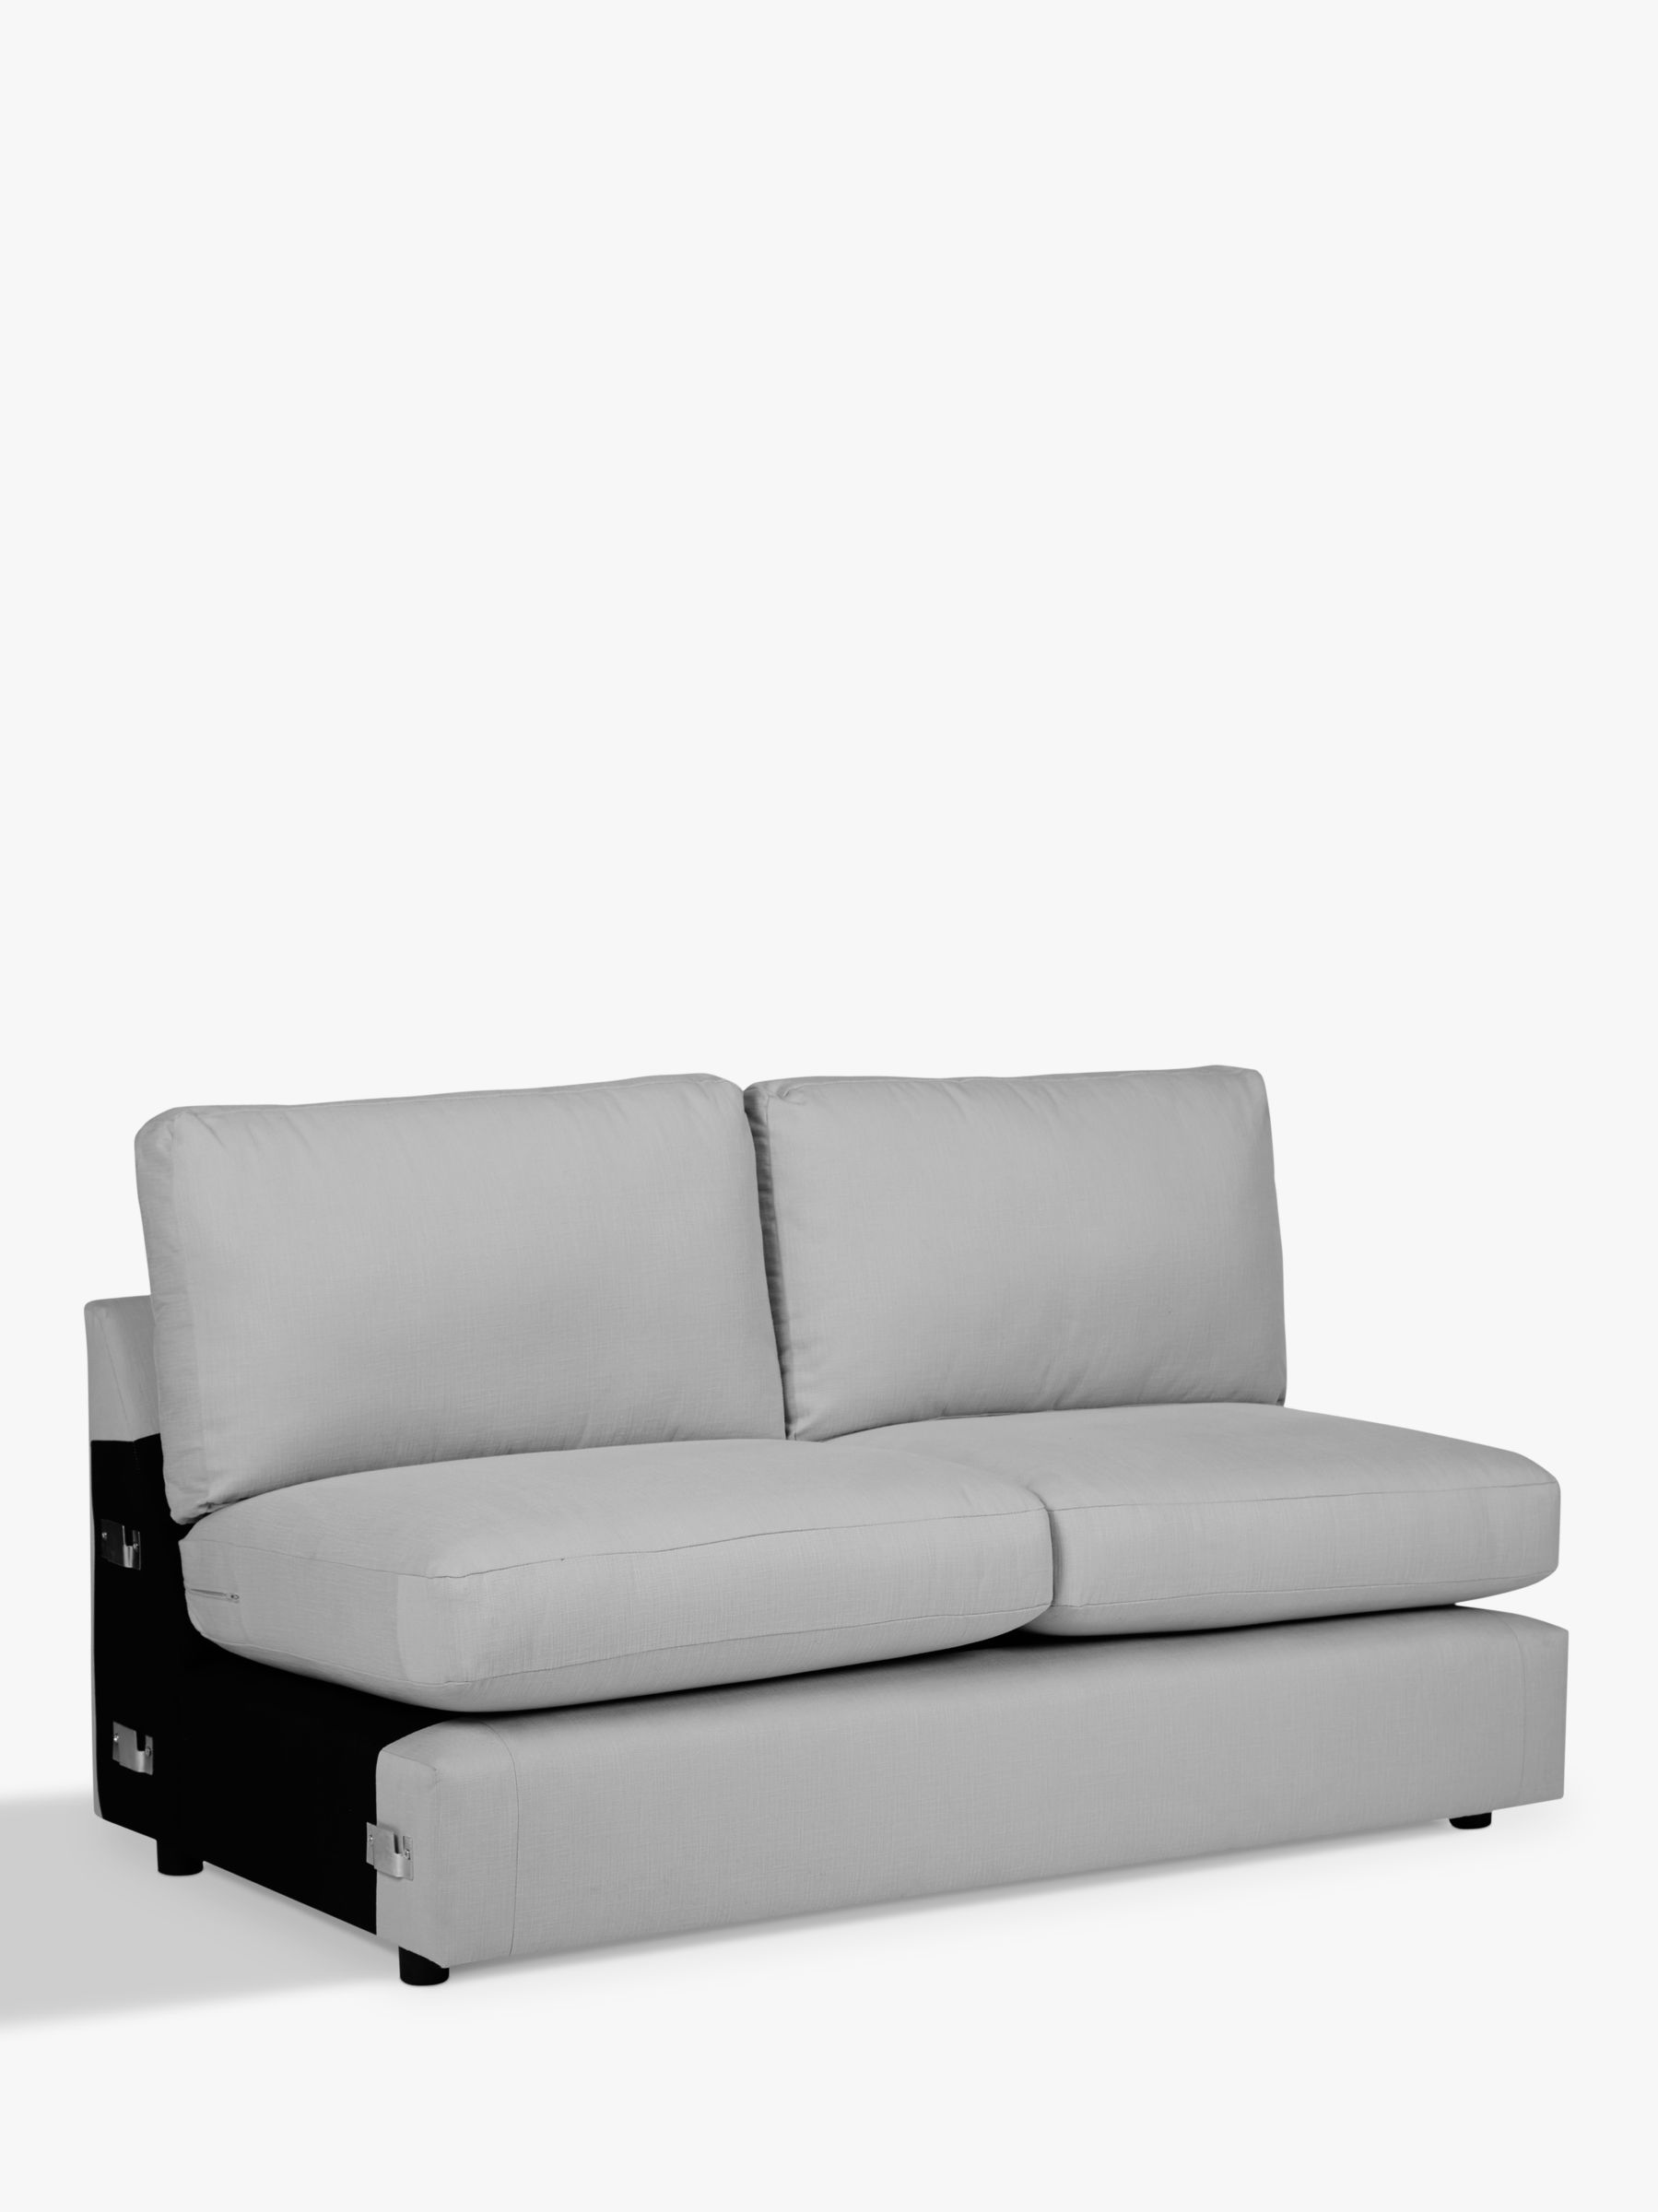 Photo of John lewis oliver modular large 3 seater armless sofa unit